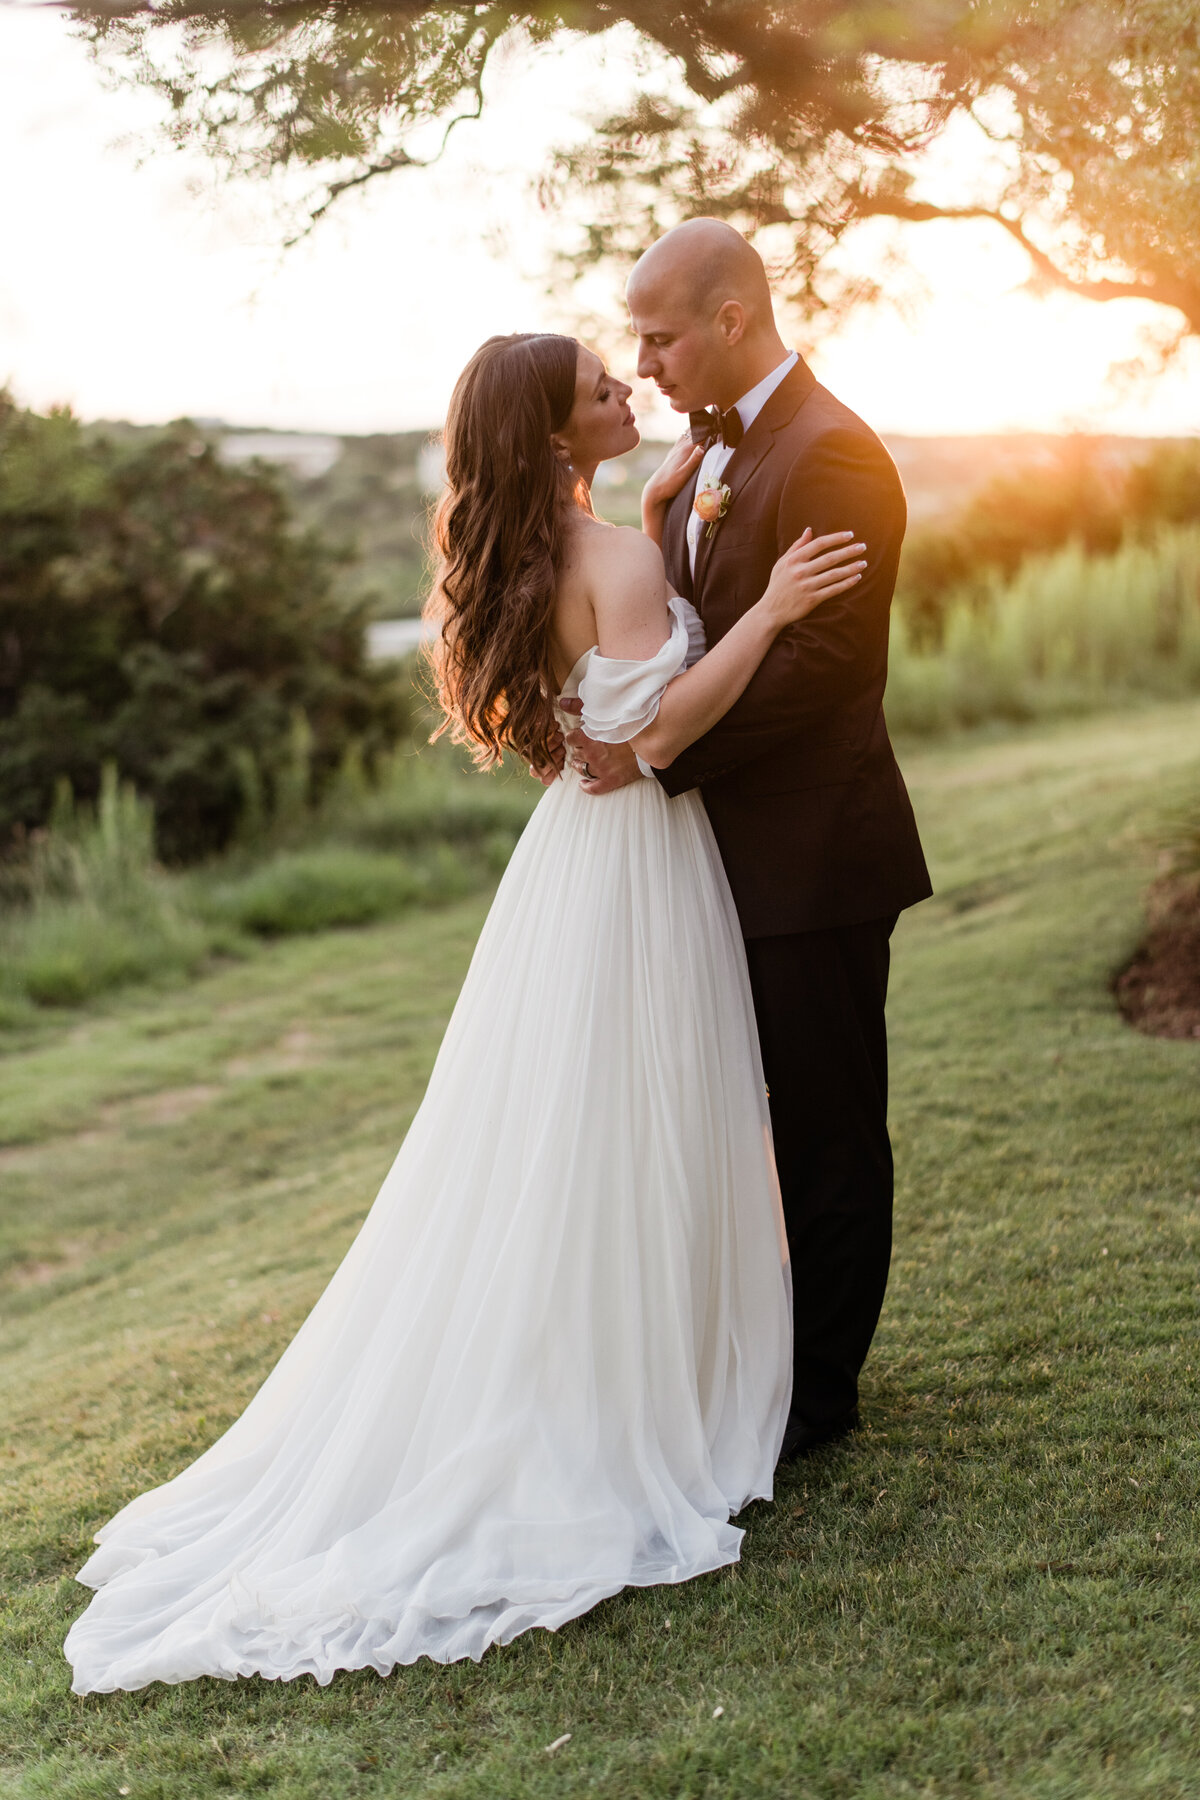 Erin&Huss-WeddingHighlights-CanyonwoodRidge-AprilMaeCreative-AustinWeddingPhotographer-Austin,Texas-216